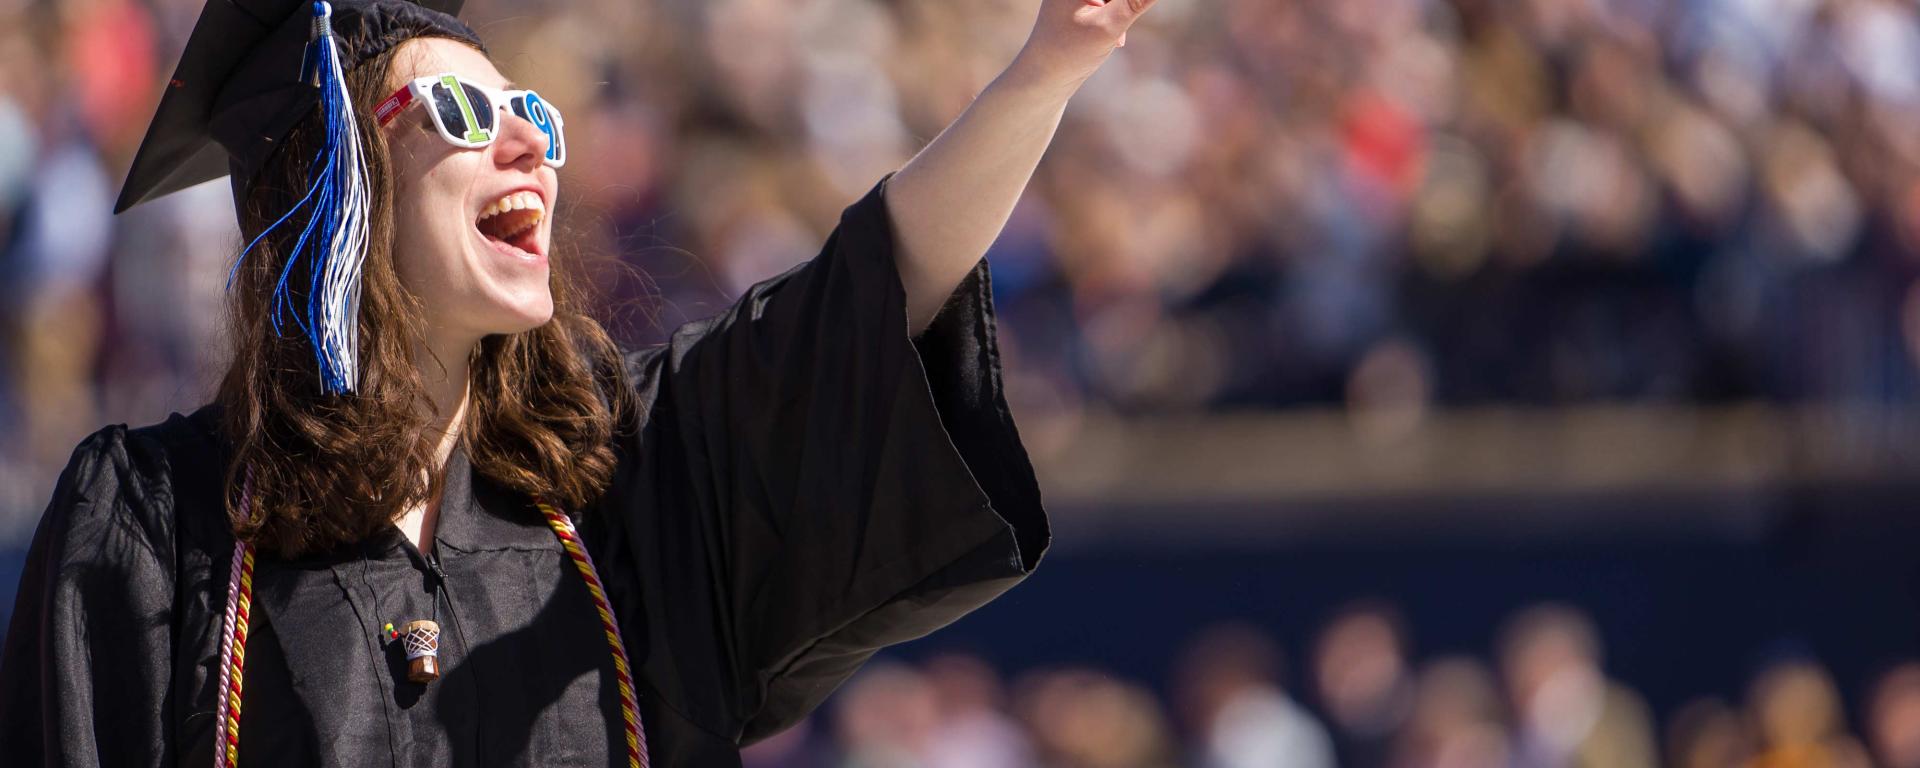 Female student cheering at graduation